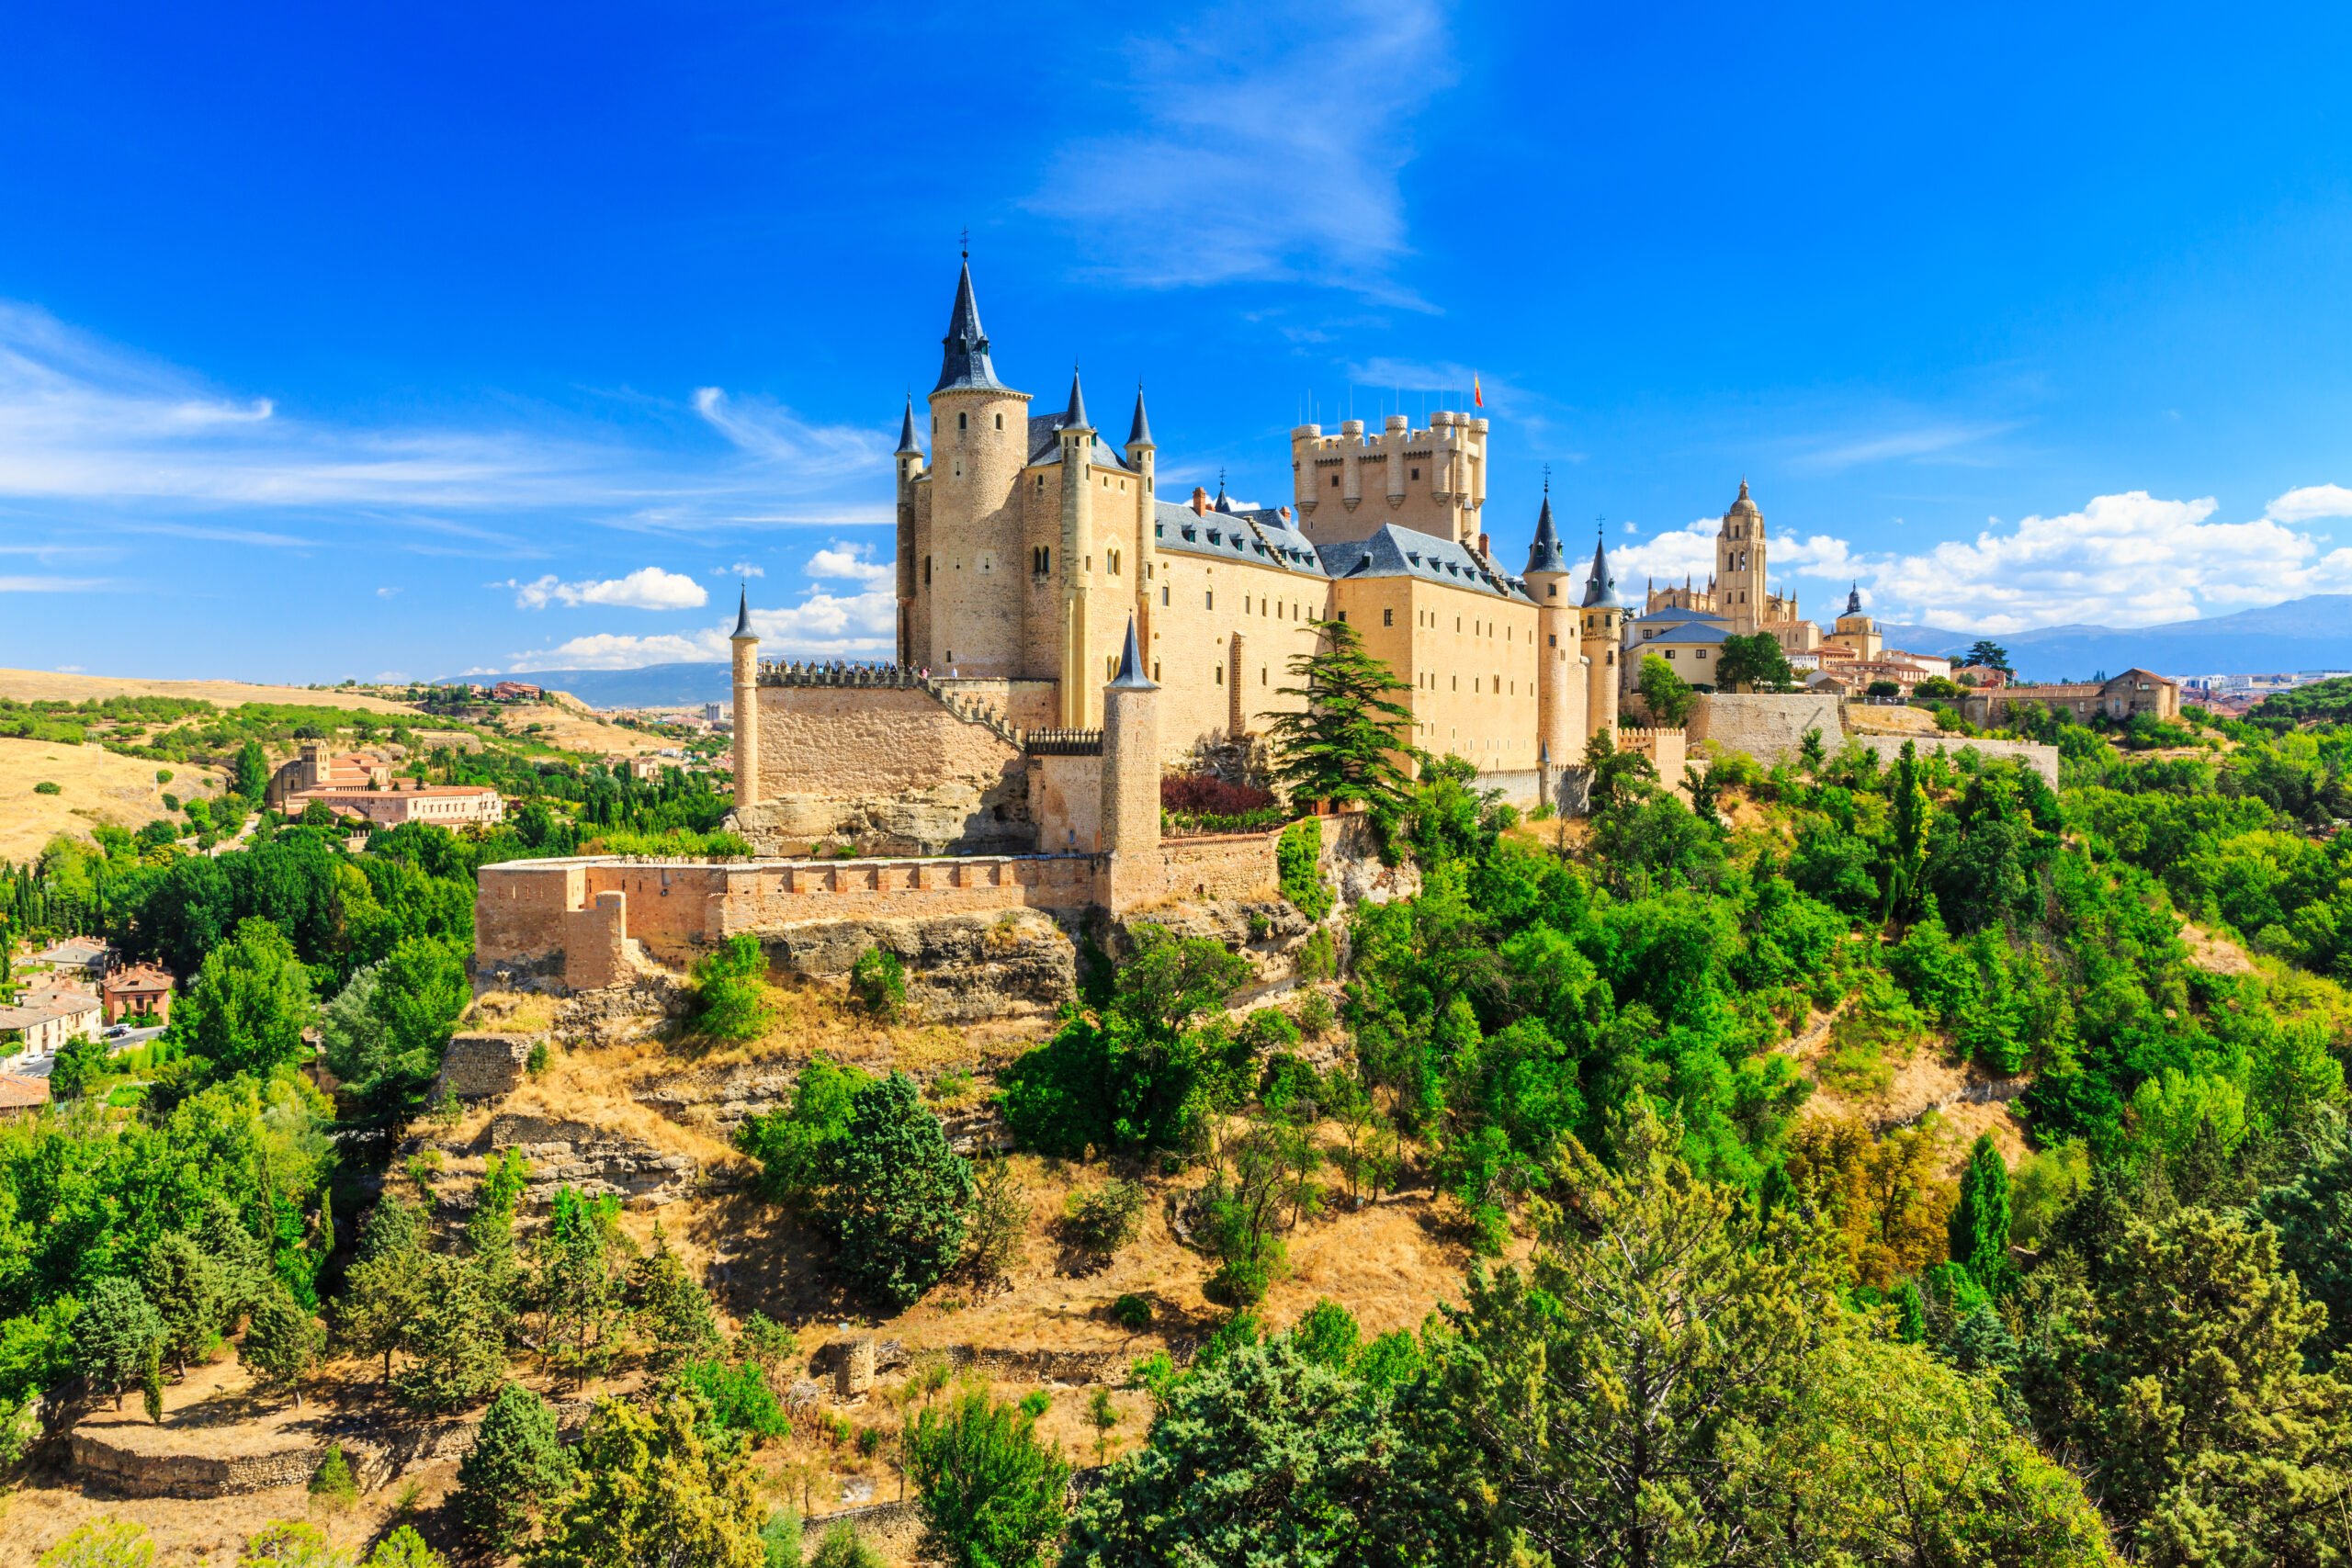 Learn About Segovia History In Our Sierra De Guadarrama Hiking & Segovia Tour